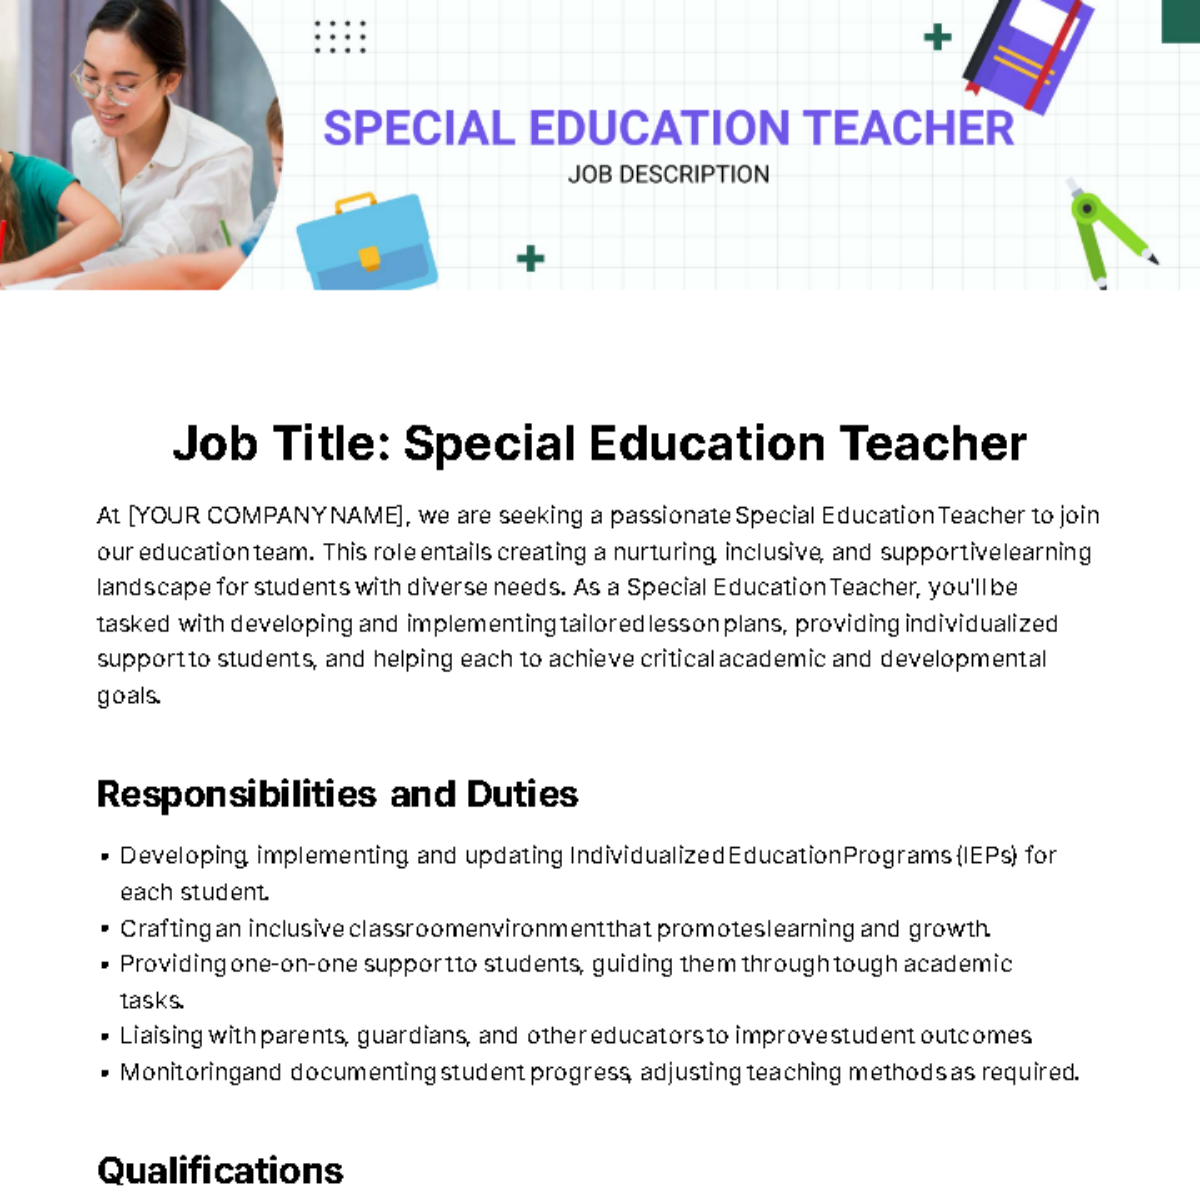 Special Education Teacher Job Description Template